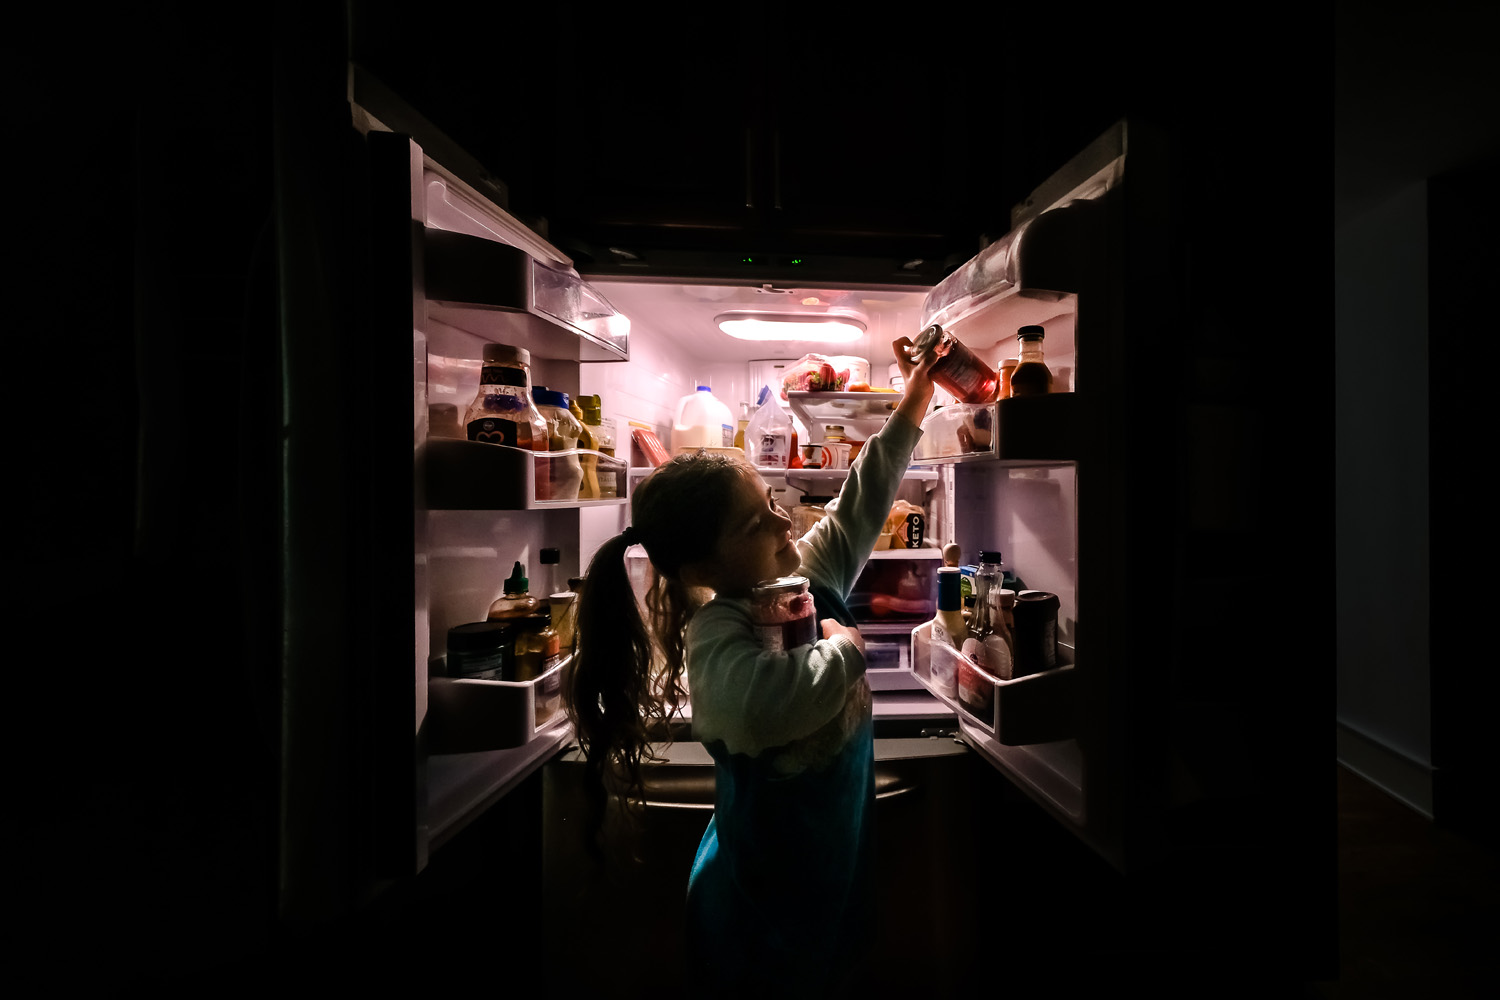 Girl takin jar from fridge in dark room. Only illumination is coming from the refrigerator's interior light